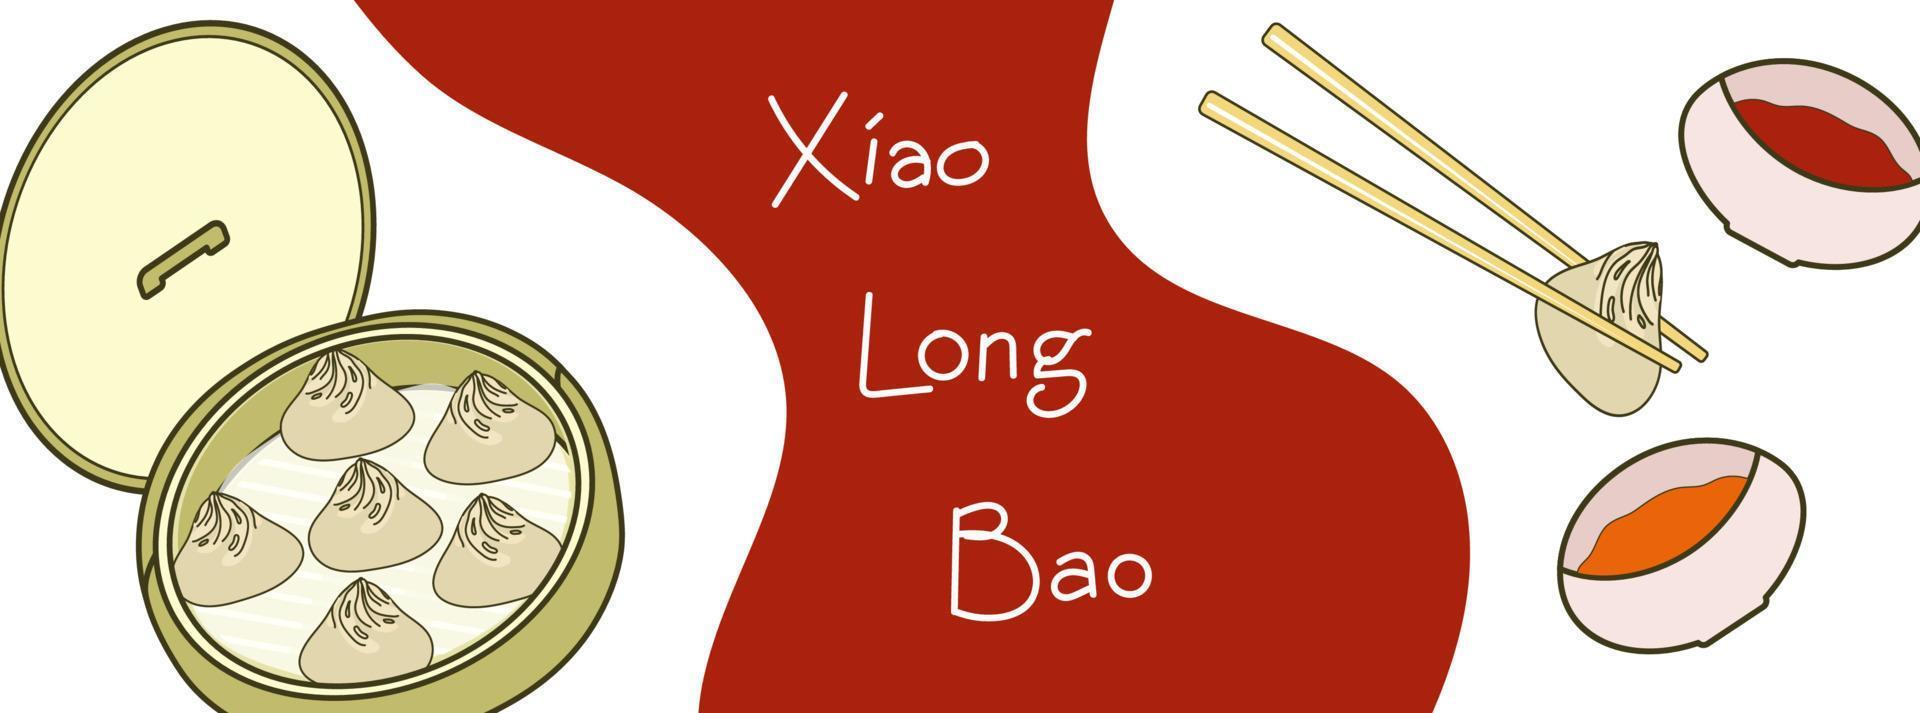 Xiao Long Bao background with dumplings vector illustration